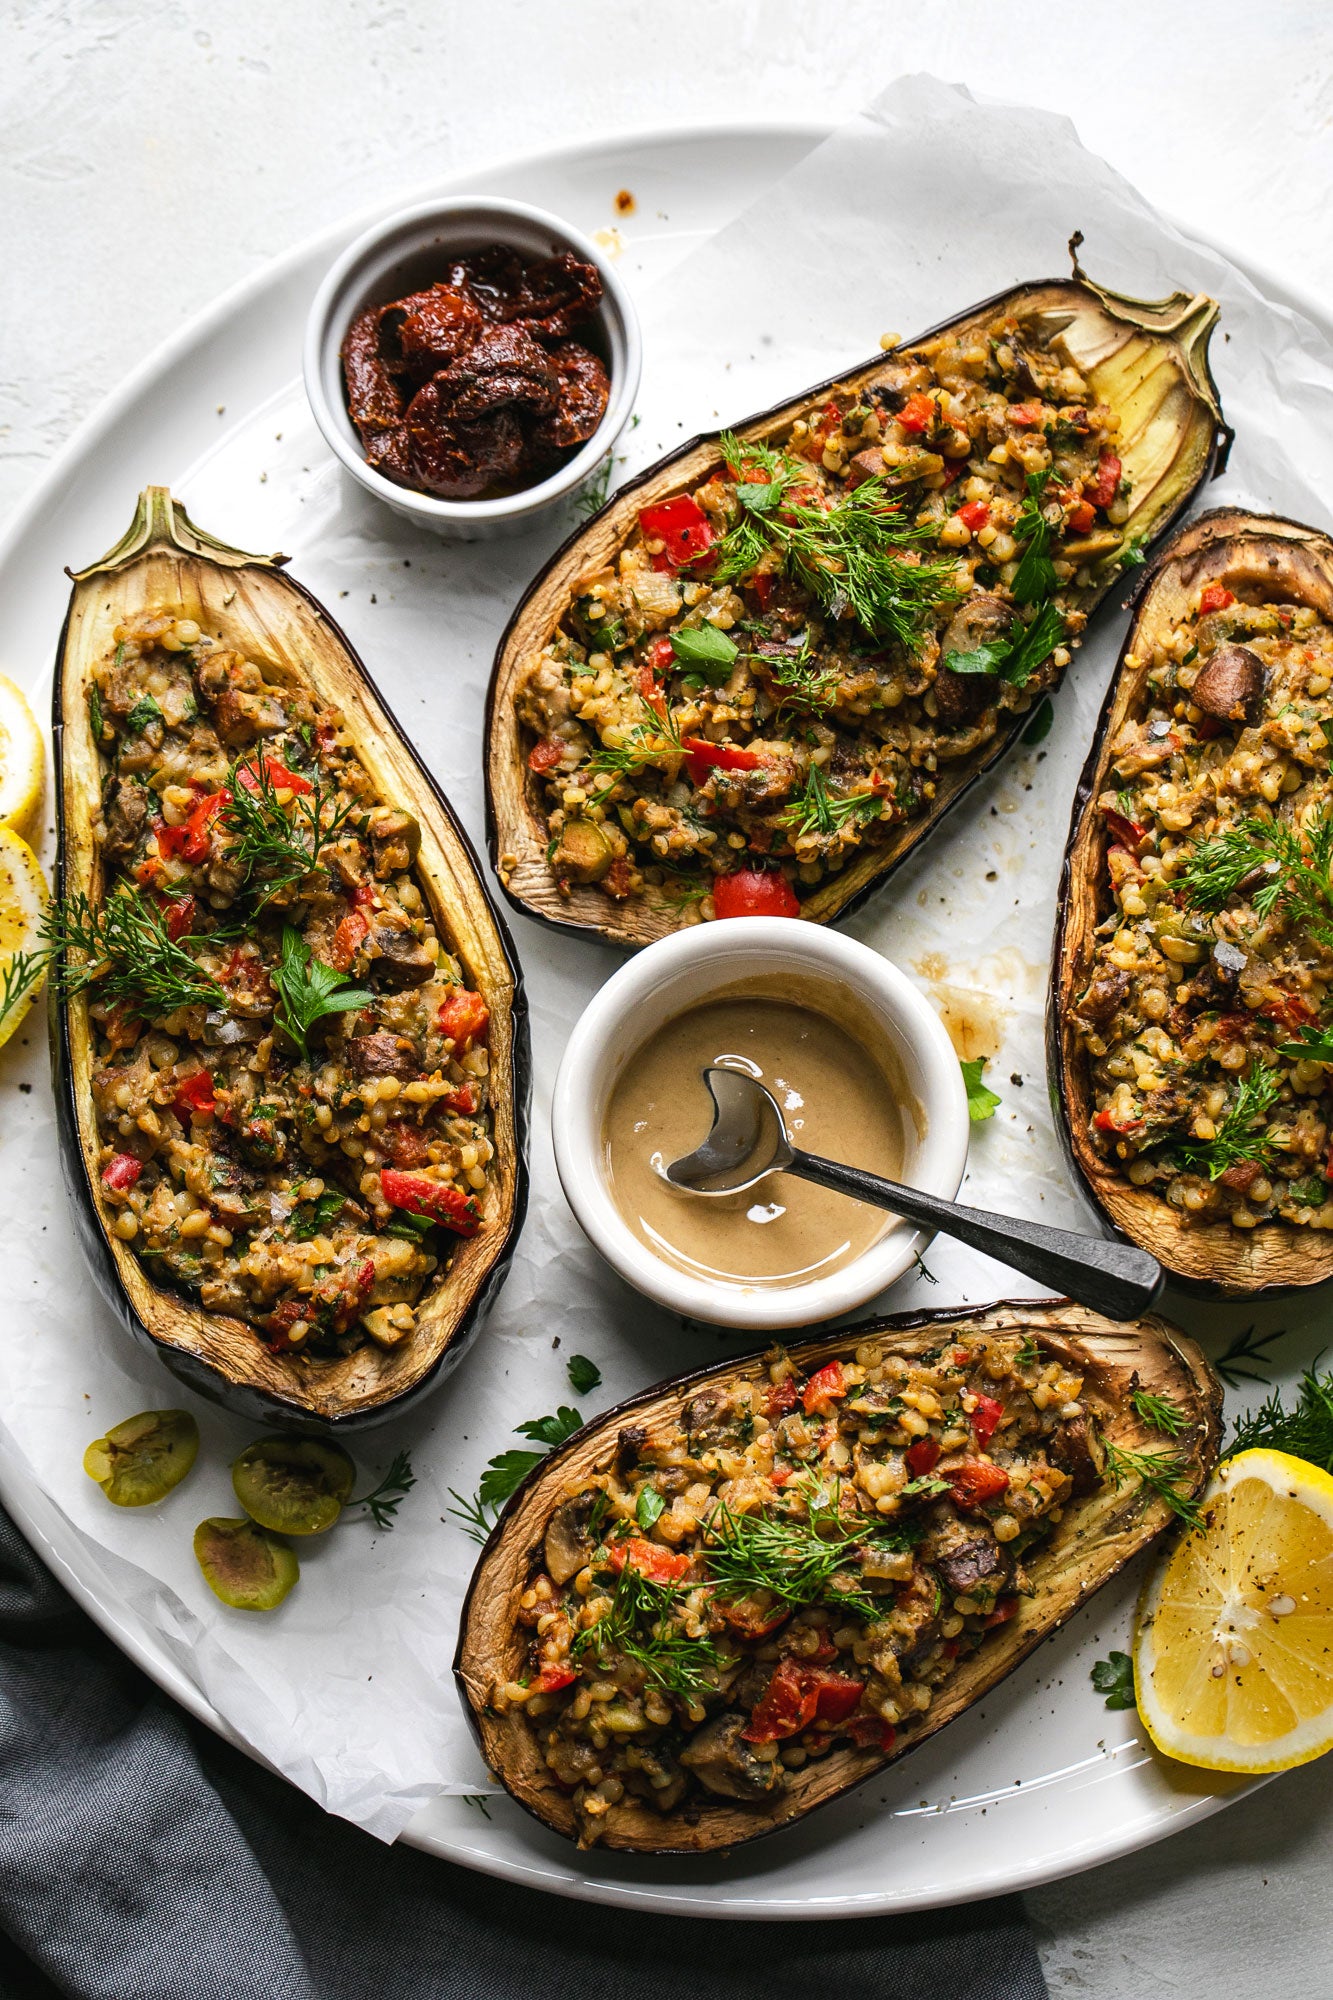 Mediterranean-Inspired Stuffed Eggplant